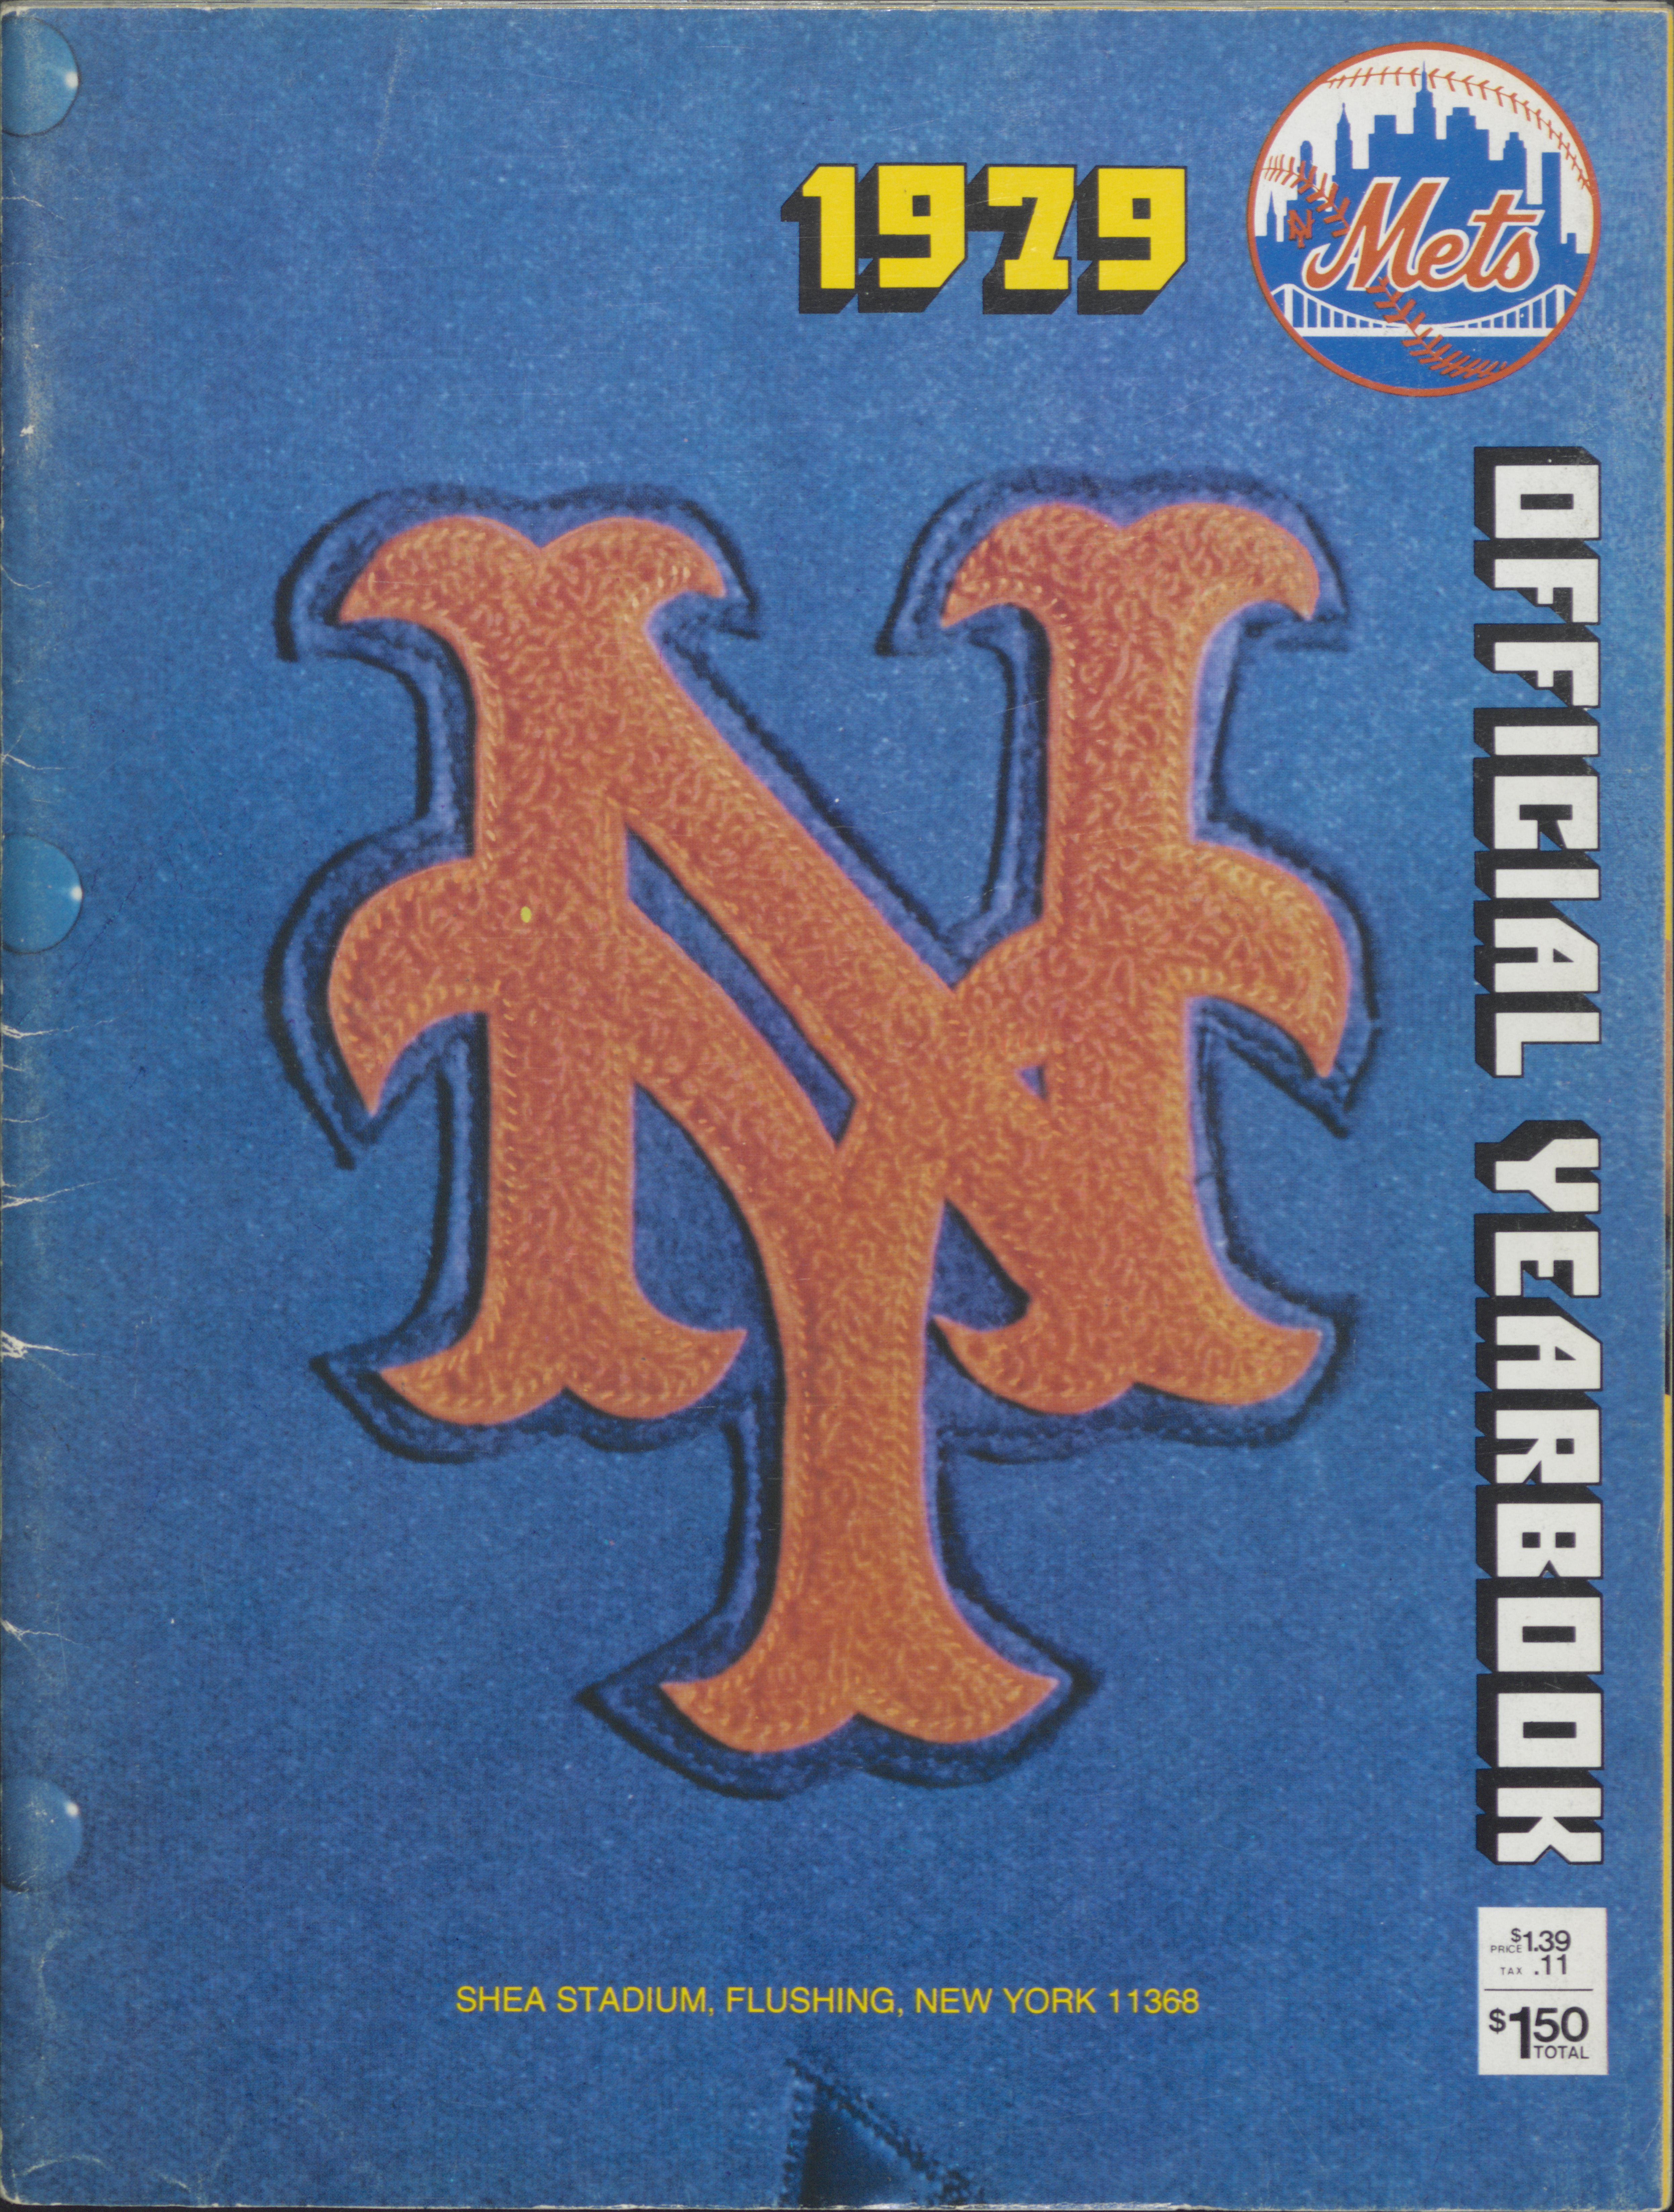 Mazzilli Autographed Batting Practice Jersey - Mets History